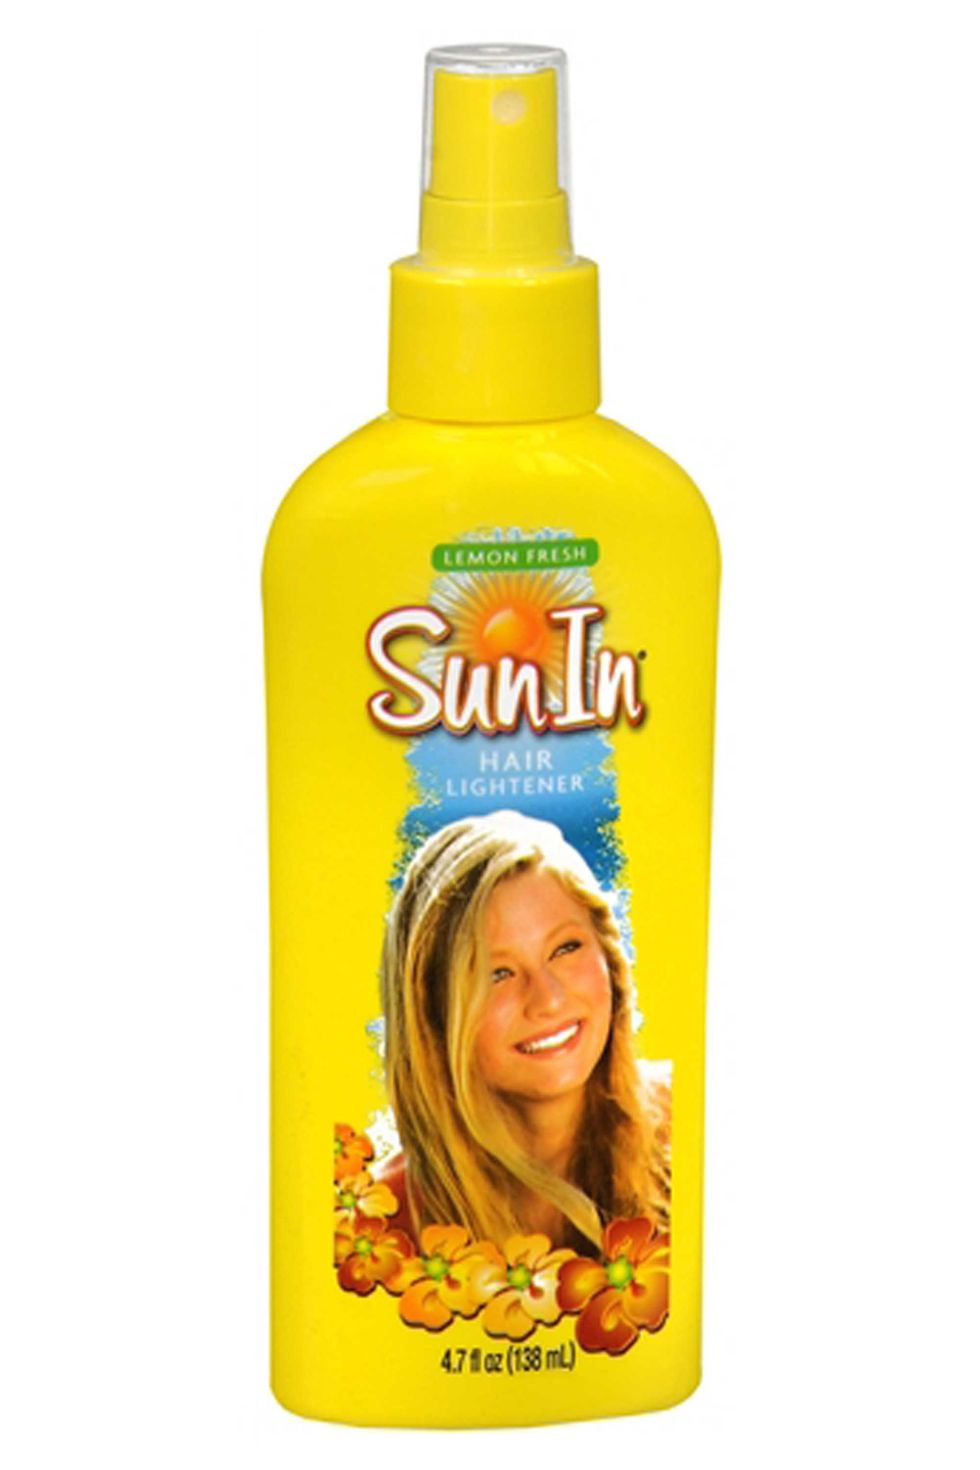 Liquid, Product, Yellow, Bottle, Bottle cap, Plastic bottle, Hair care, Blond, Long hair, Brown hair, 